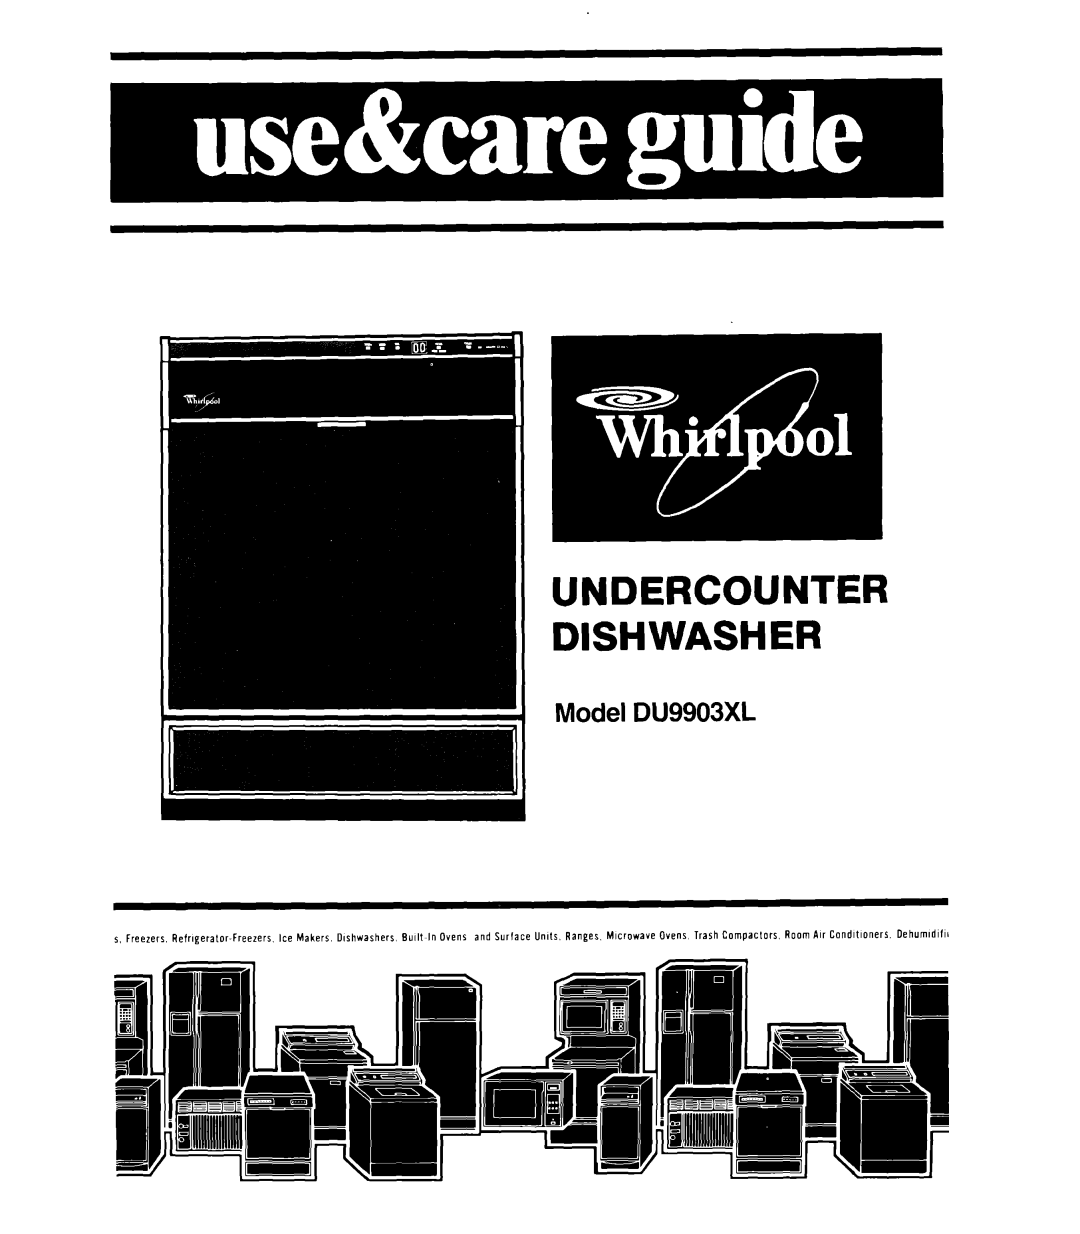 Whirlpool manual s gI1, Undercounter Dishwasher, Model DU9903XL 